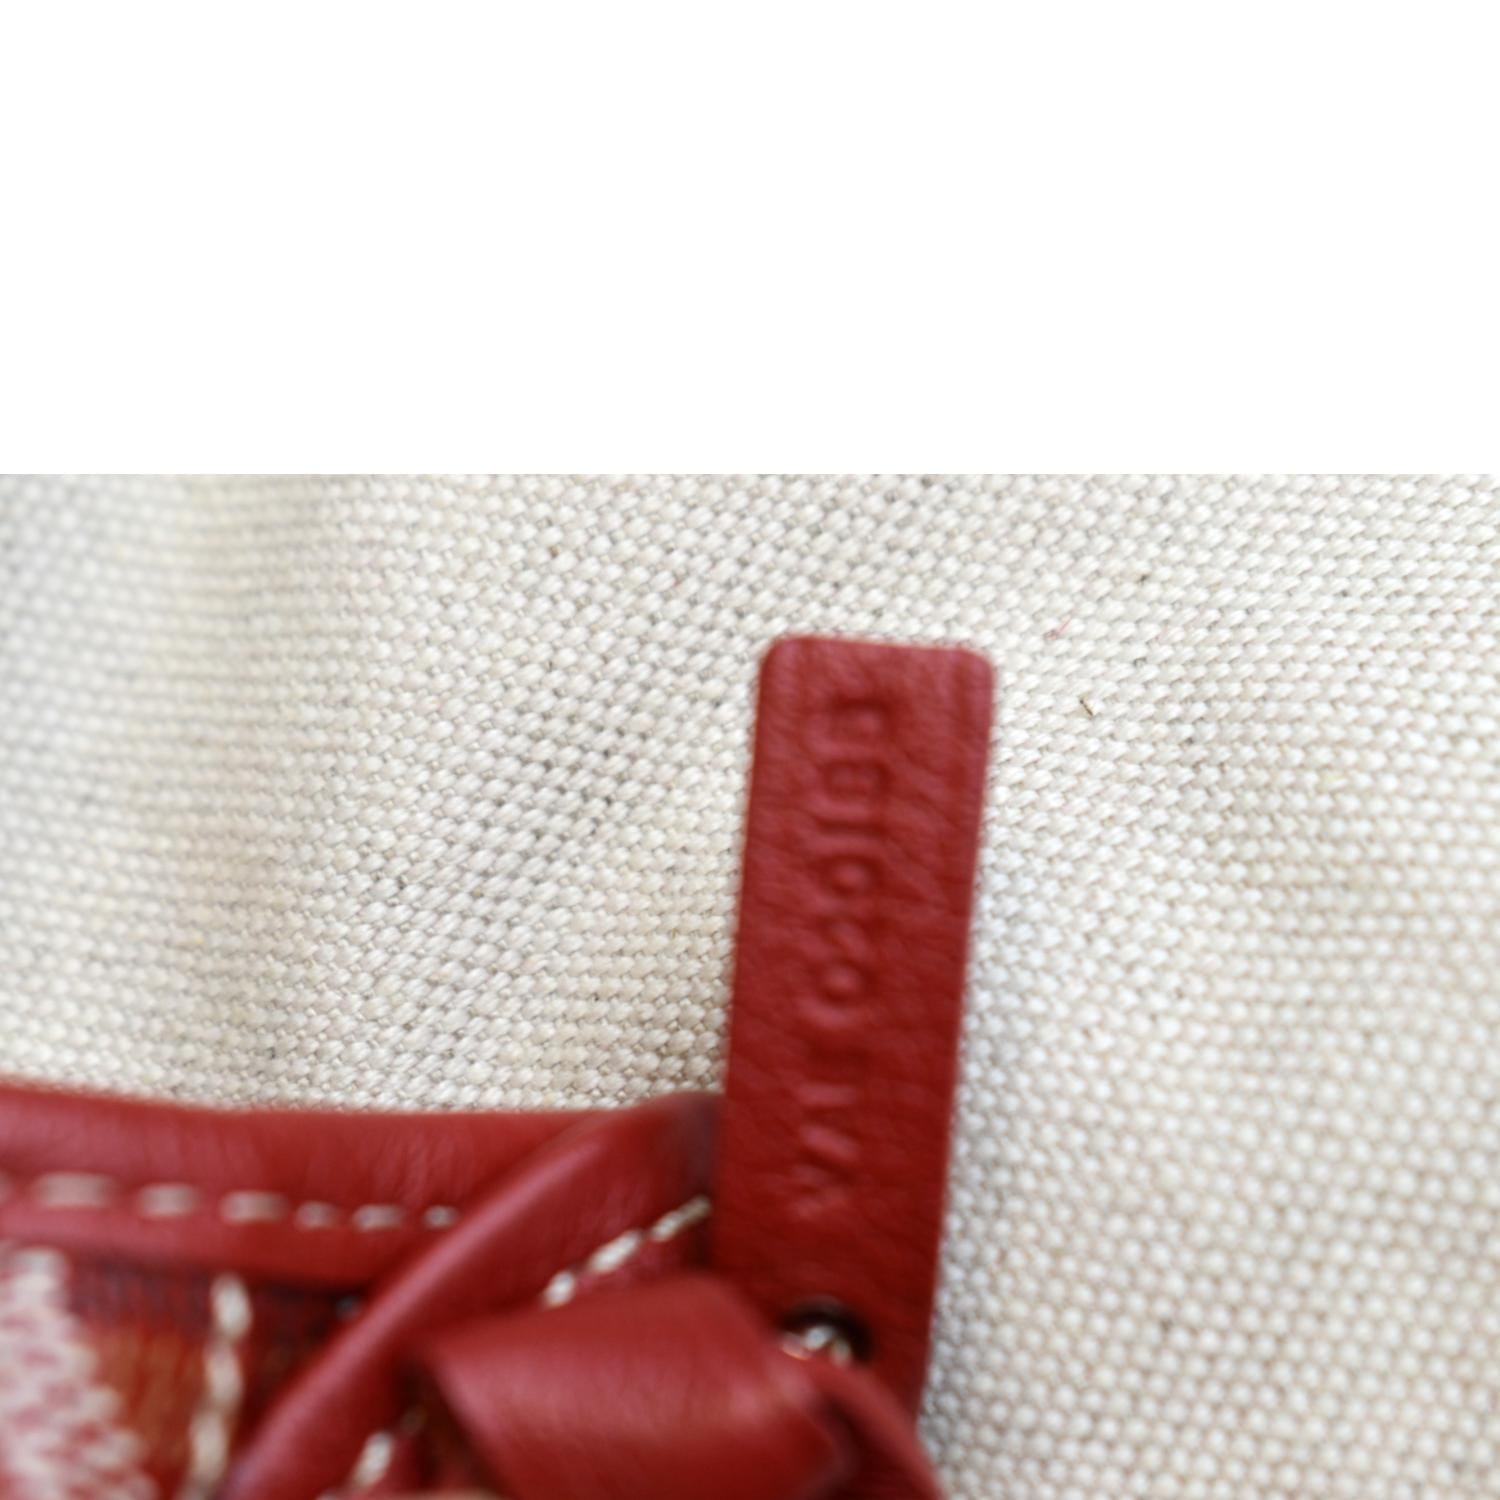 Goyard, Bags, 0 Authentic Goyard St Louis Tote Size Gm Red